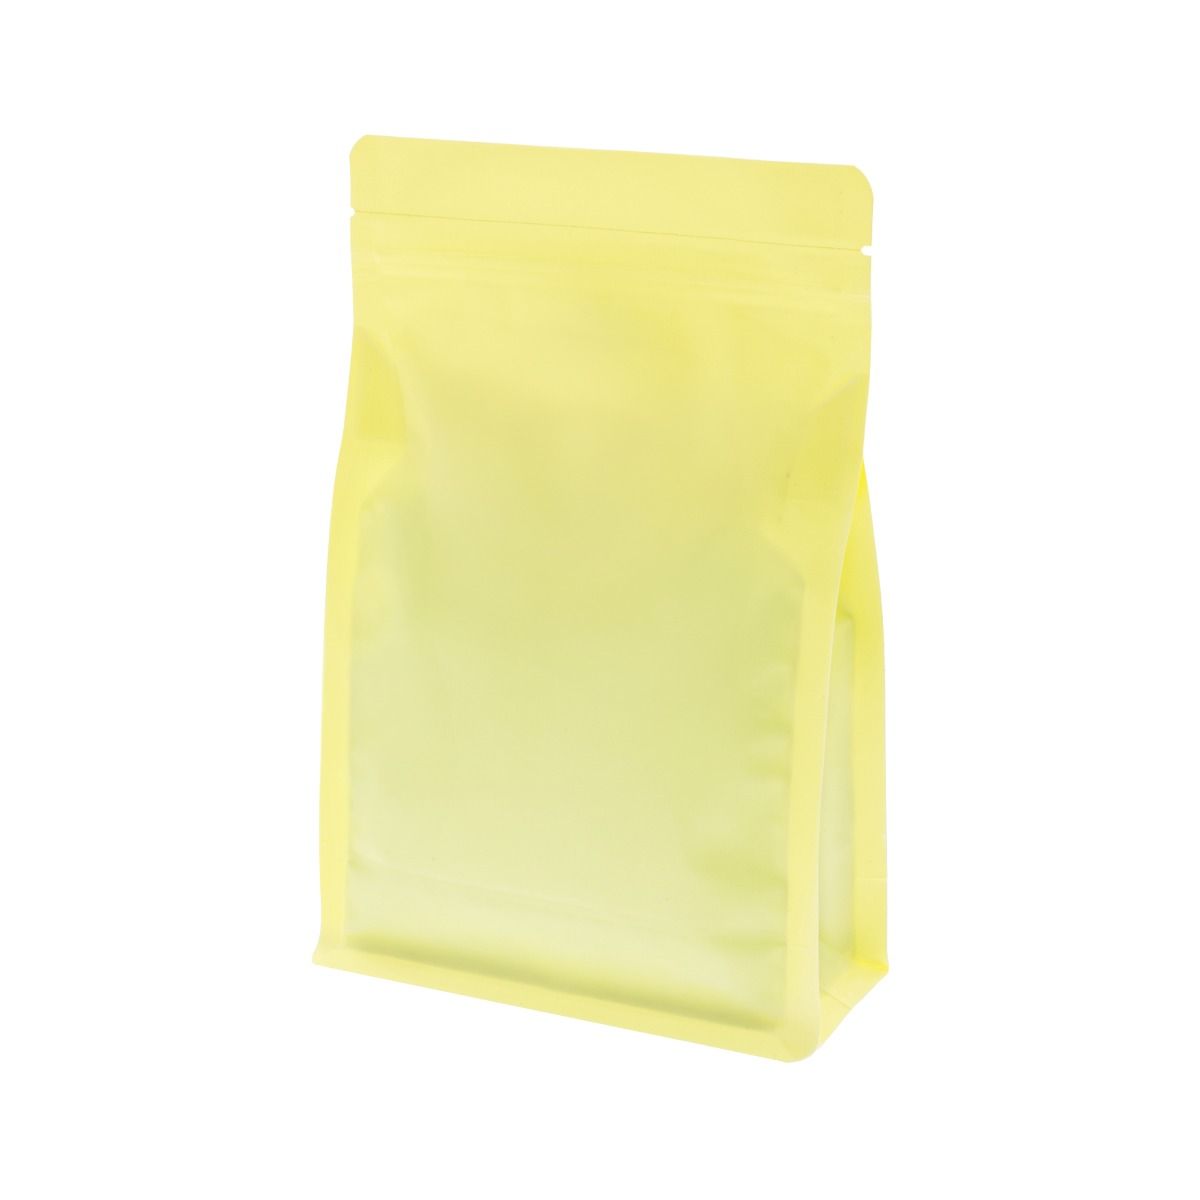 Flat bottom pouch with zipper - matt yellow (100% recyclable)